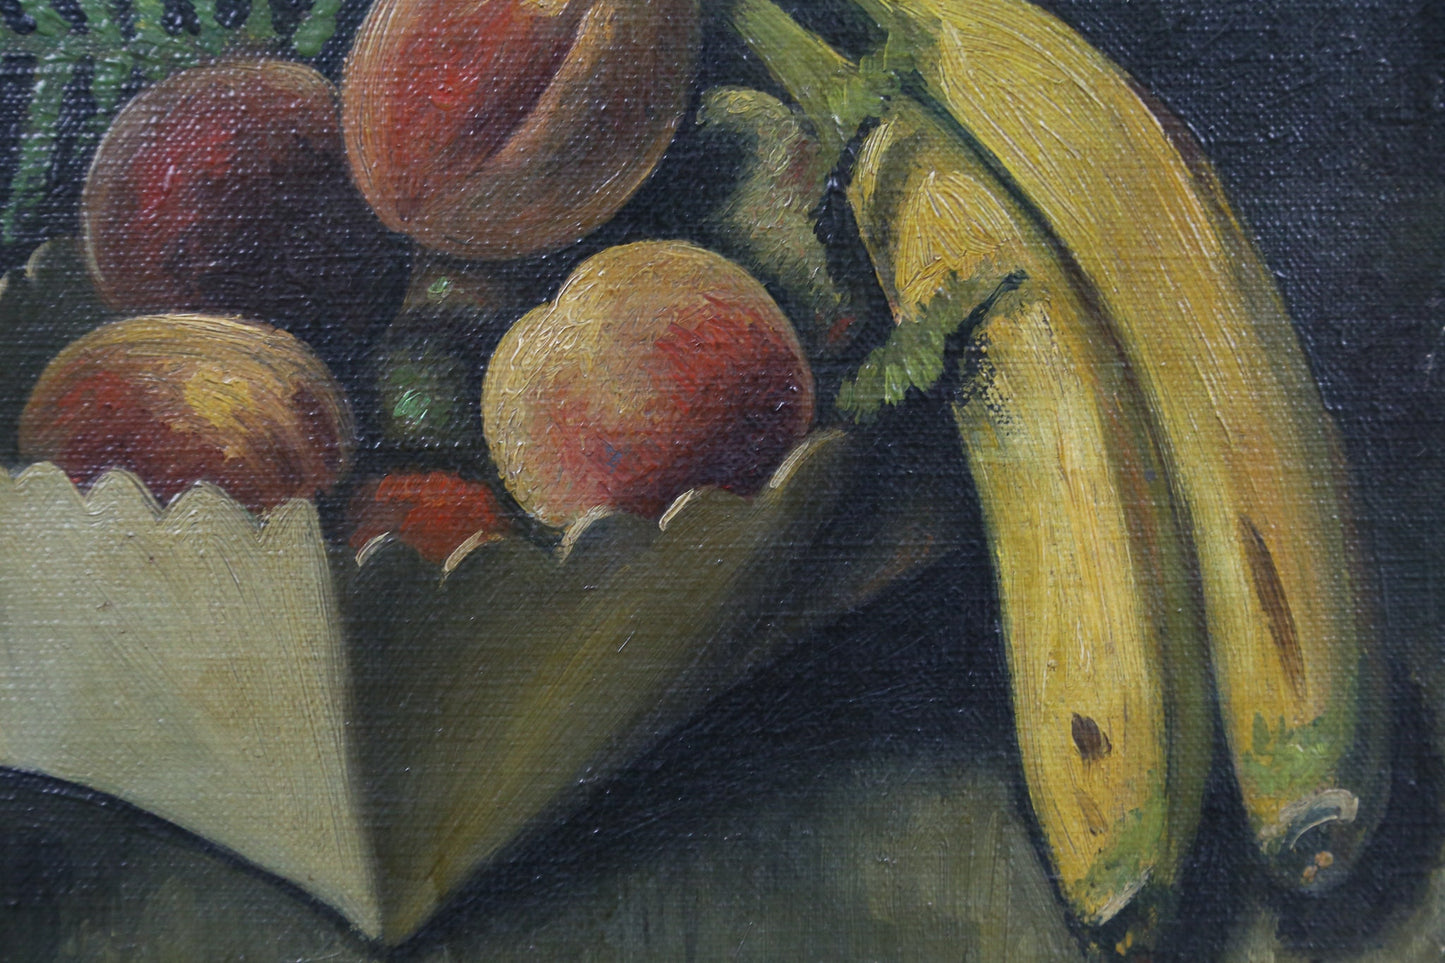 Painting Grigor Chiltian Still Life Peaches Bananas Signed 1930 Suggestive Gay Erotic Art Fruit Armenian Gregory Sciltian Gregorio Sciltian